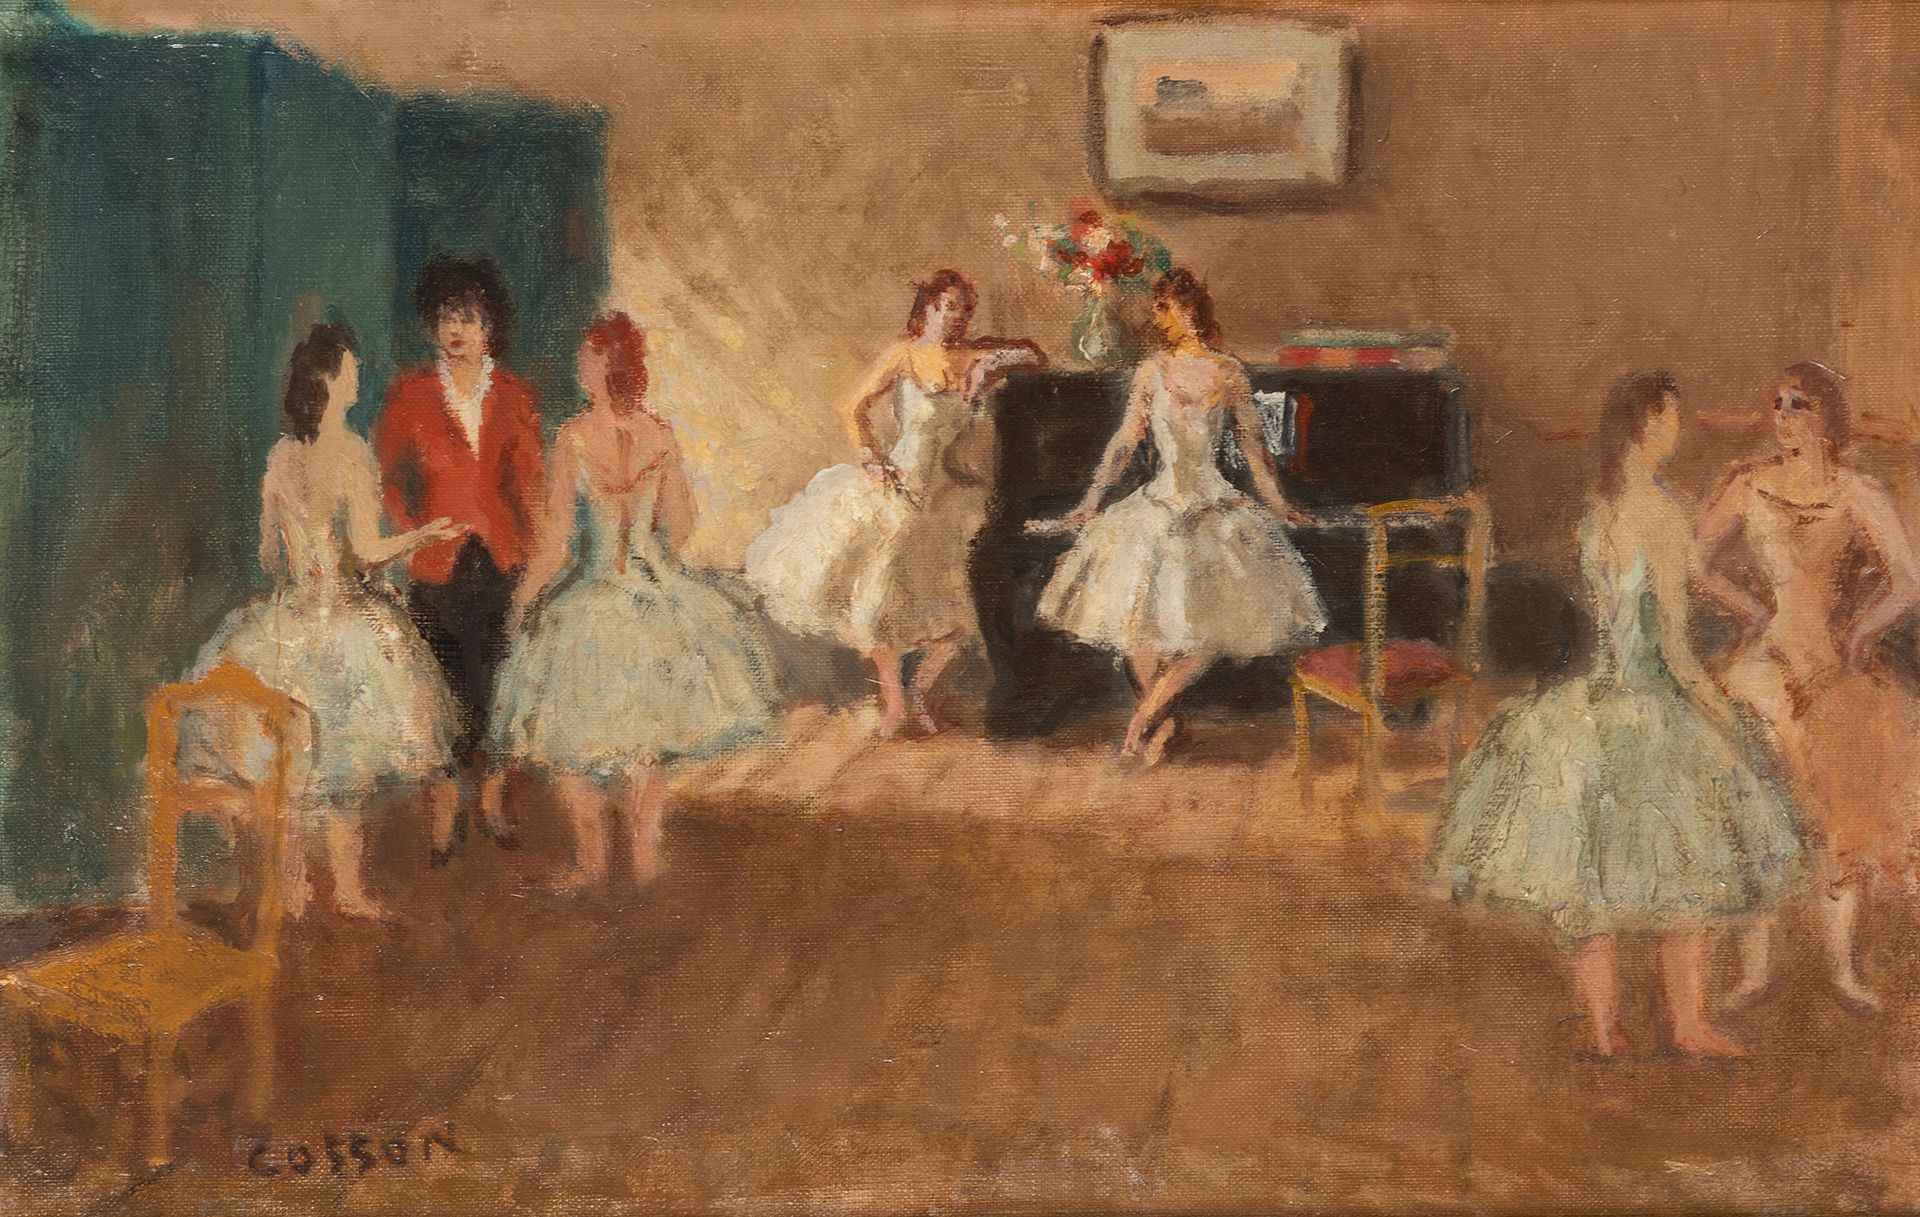 Null 马塞尔-科森 (Marcel COSSON) (1878-1956)

重复性

布面油画。左下方有签名

41 x 27 cm